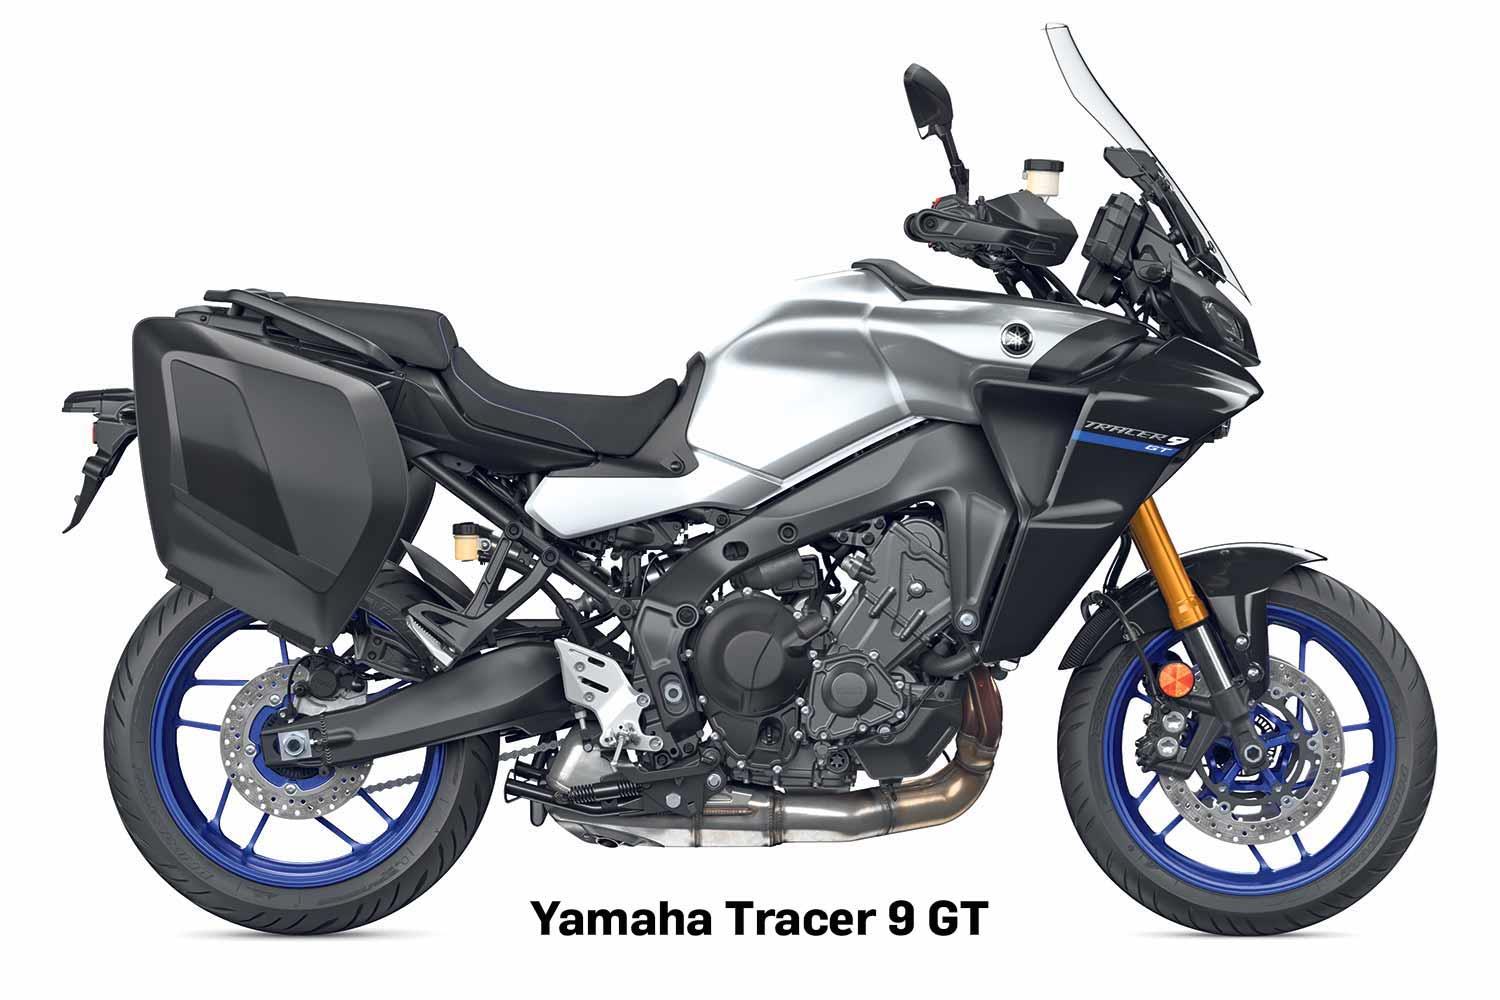 Yamaha Tracer 9 GT long-term test